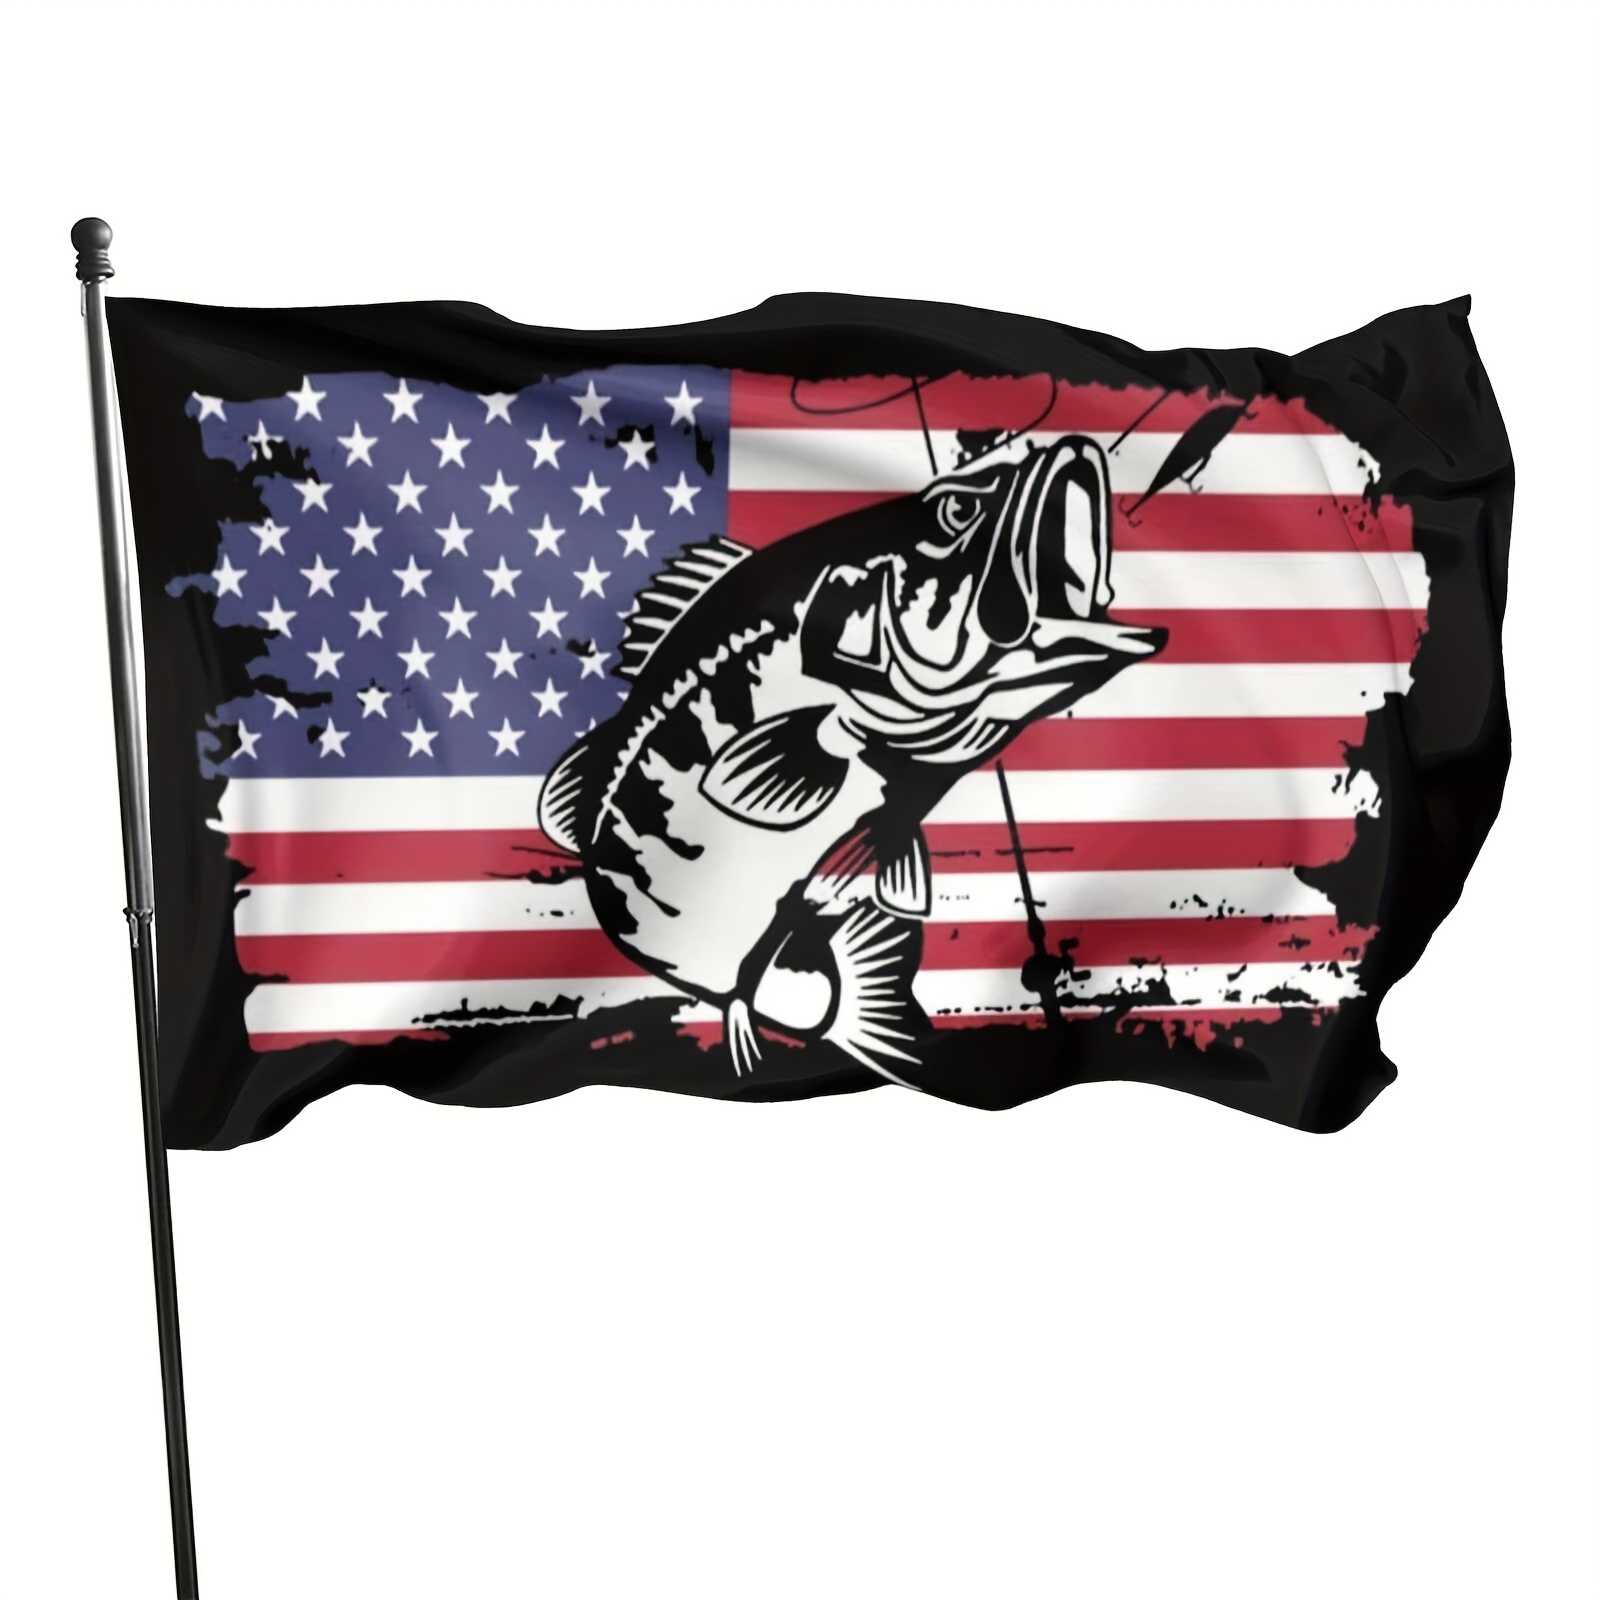 USA Bass United States Fish Fisher-man Flag Banner 3x5 Feet